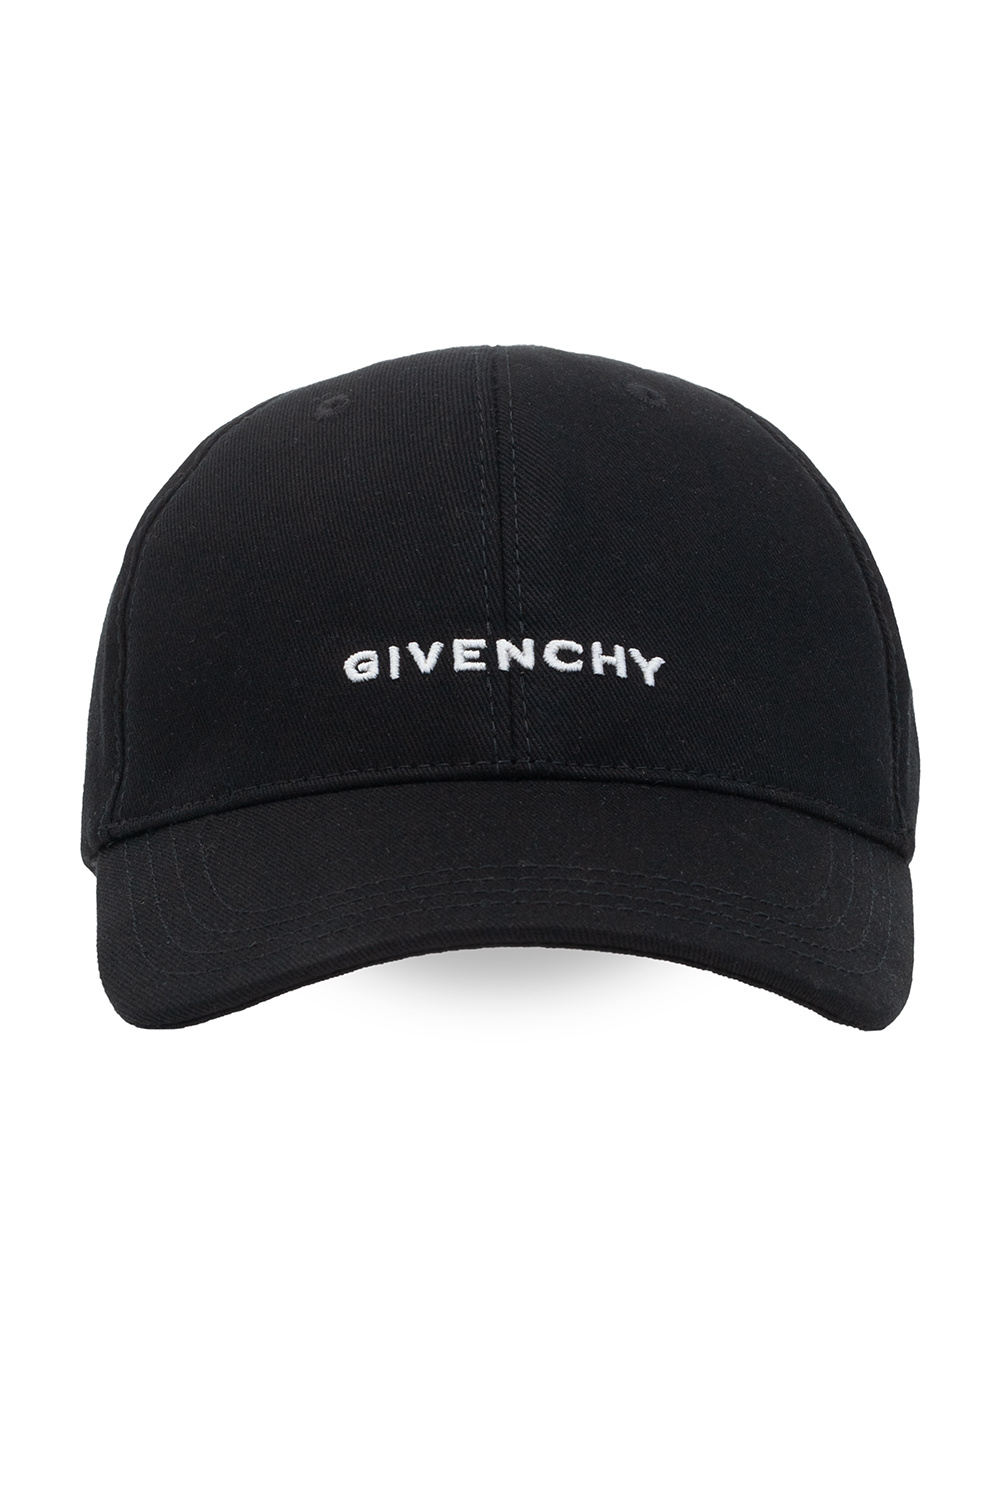 Givenchy Logo-embroidered baseball cap | Men's Accessories | Vitkac